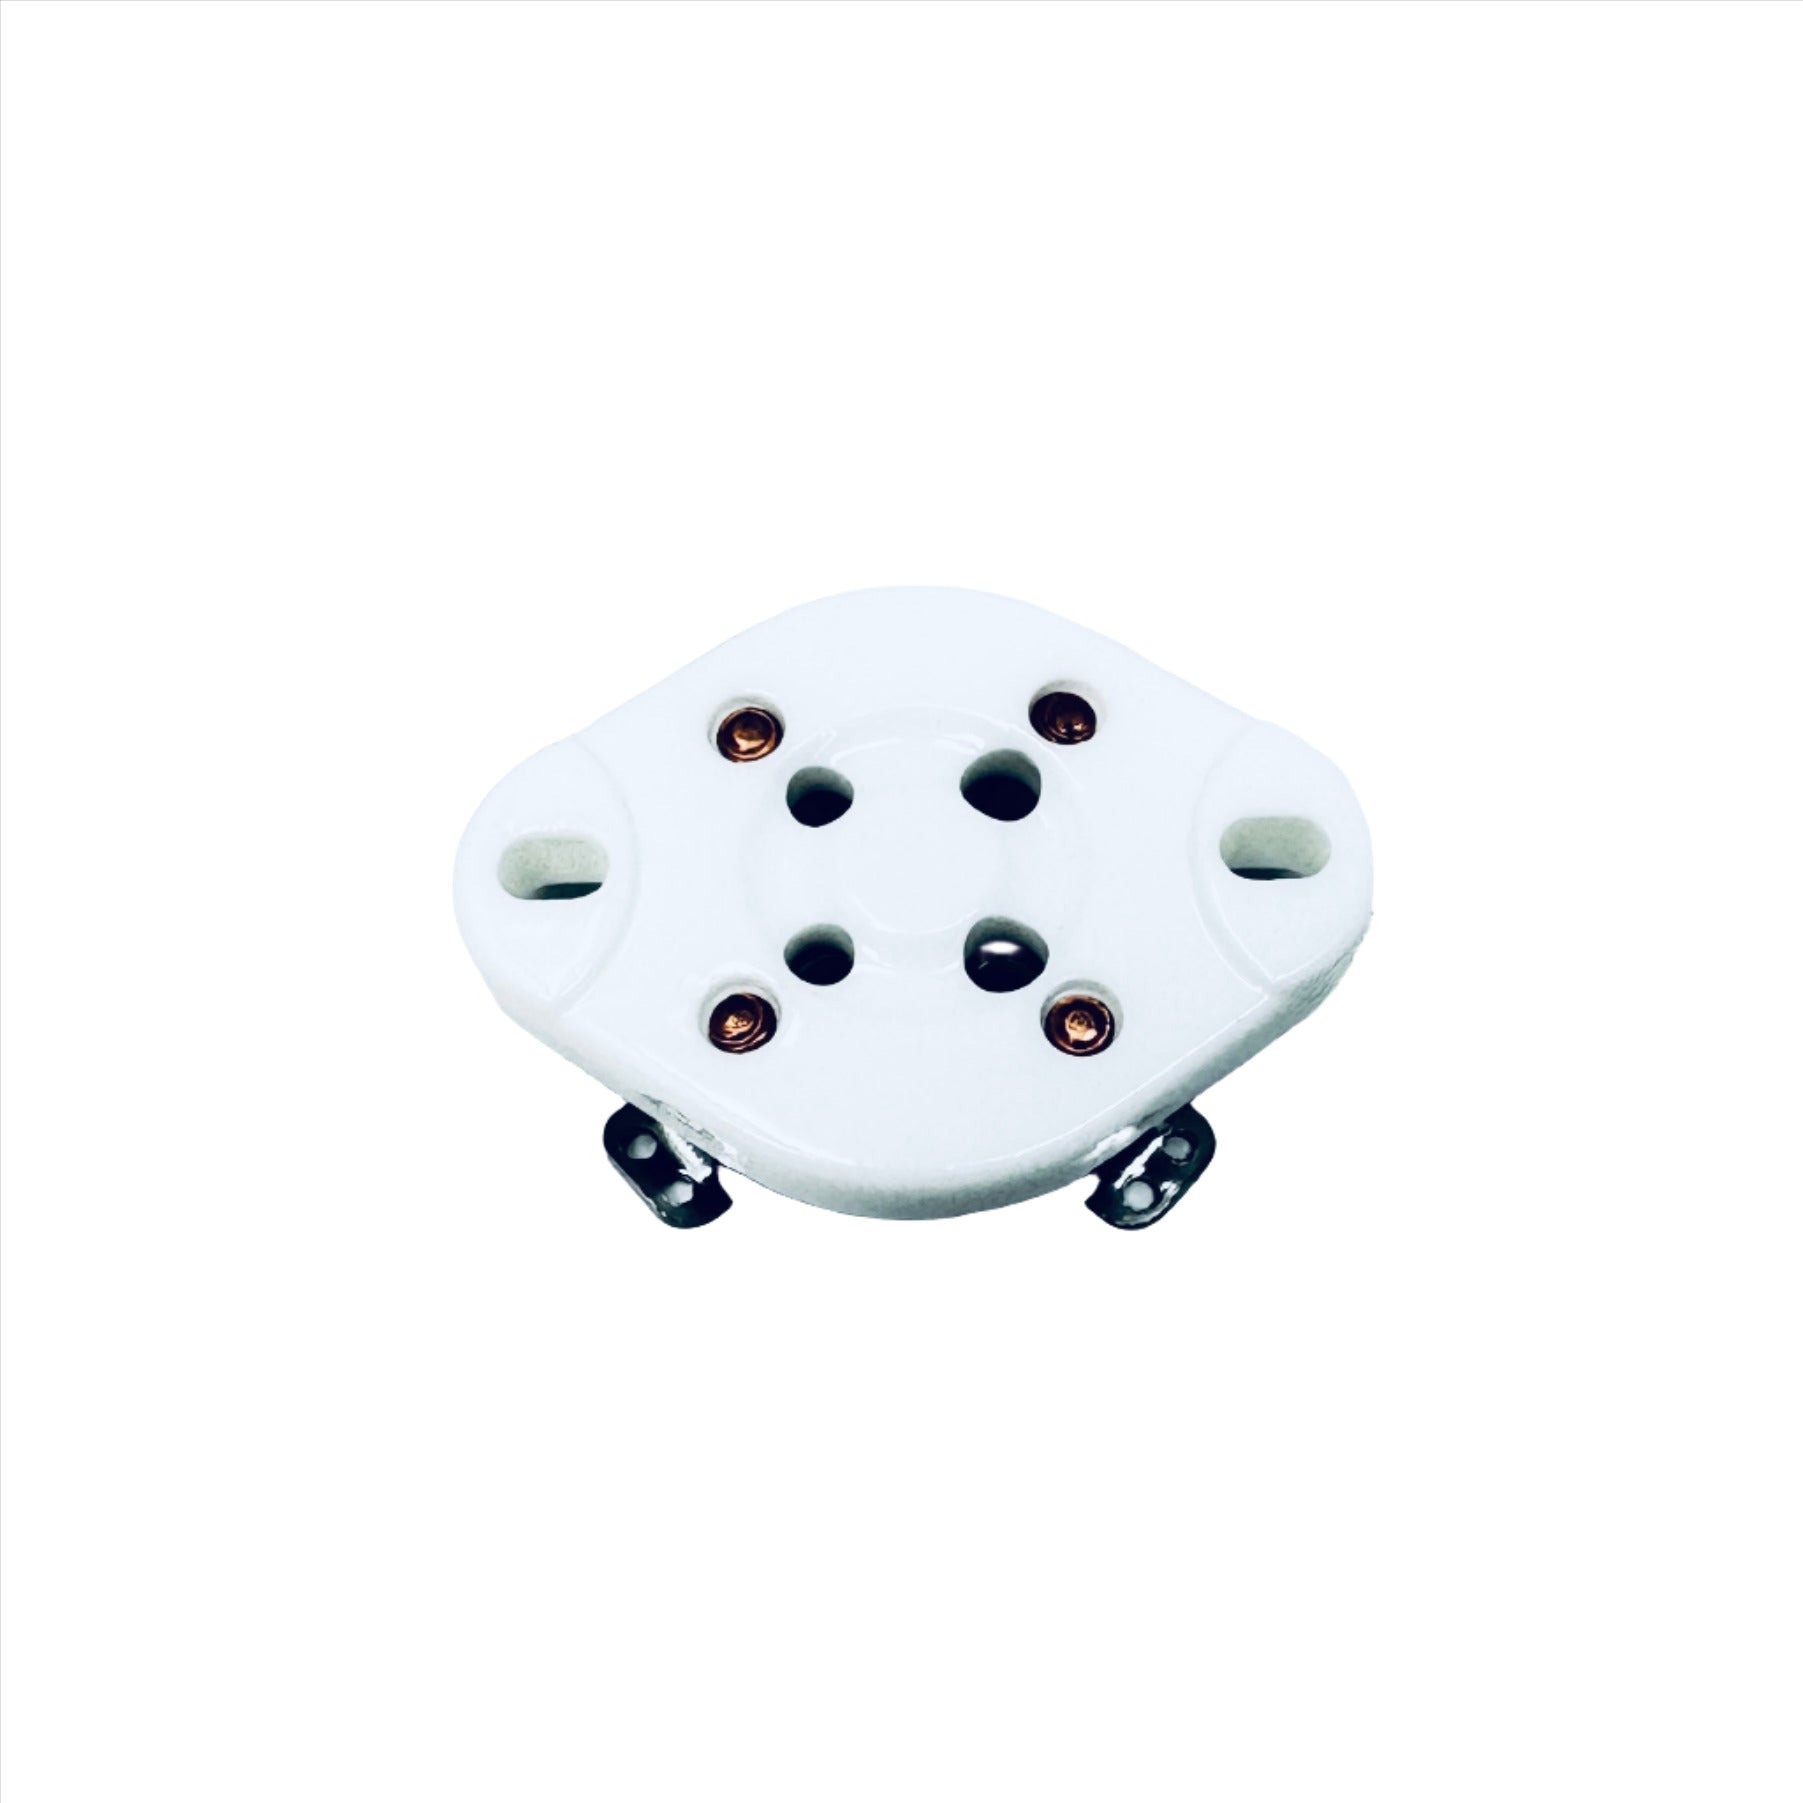 4-Pin Ceramic Solder Socket - TUS4C1. ruby ceramic socket